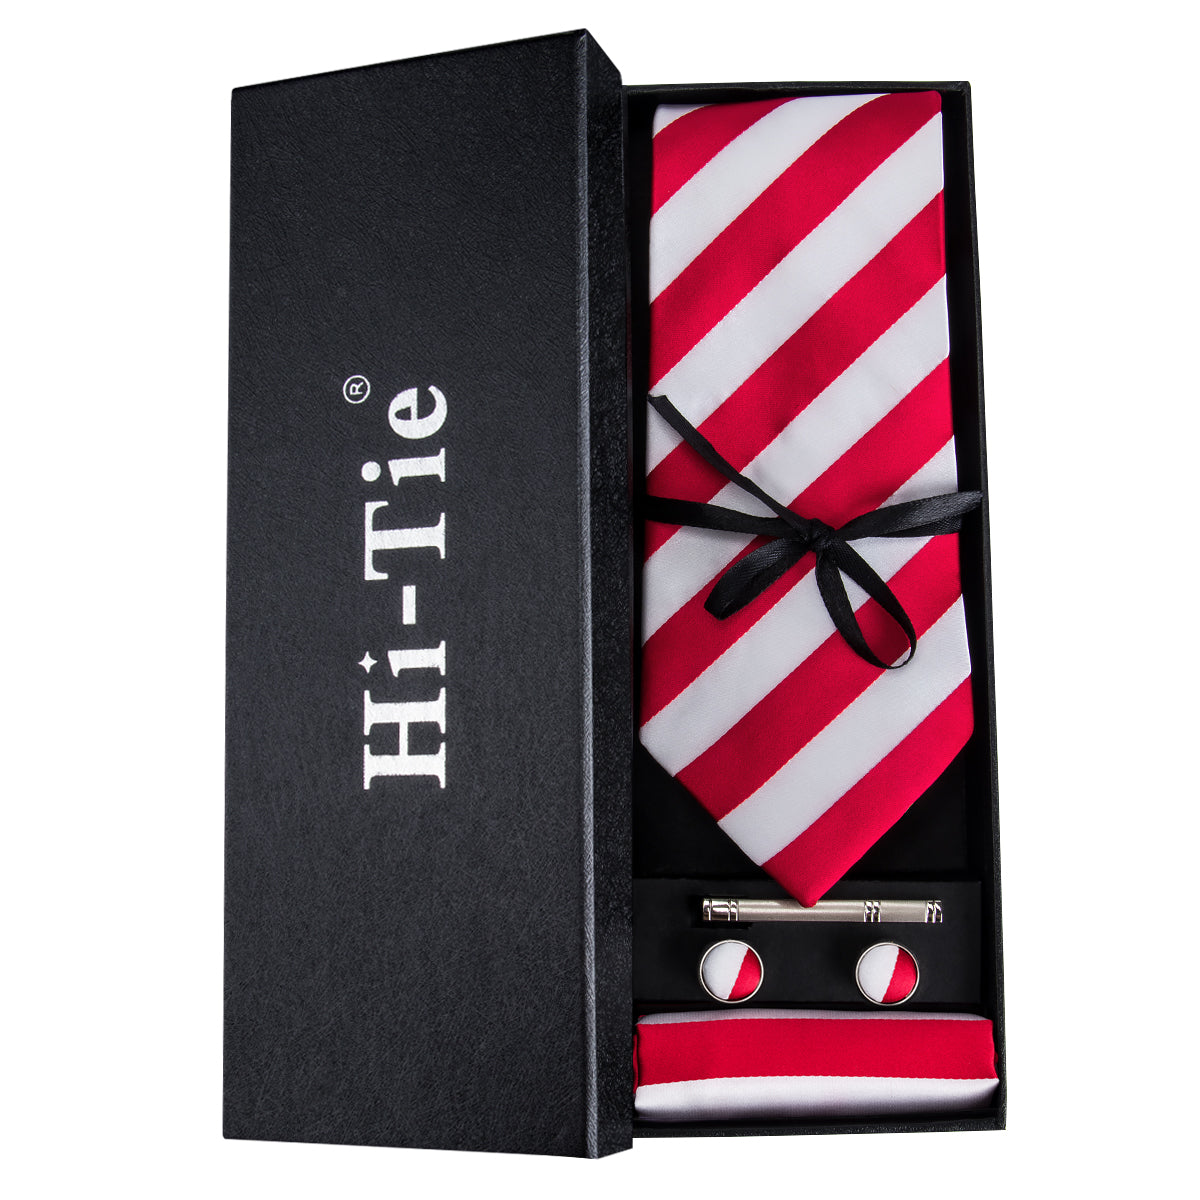 Red White Striped Tie Pocket Square Cufflinks Set Gift Box Set